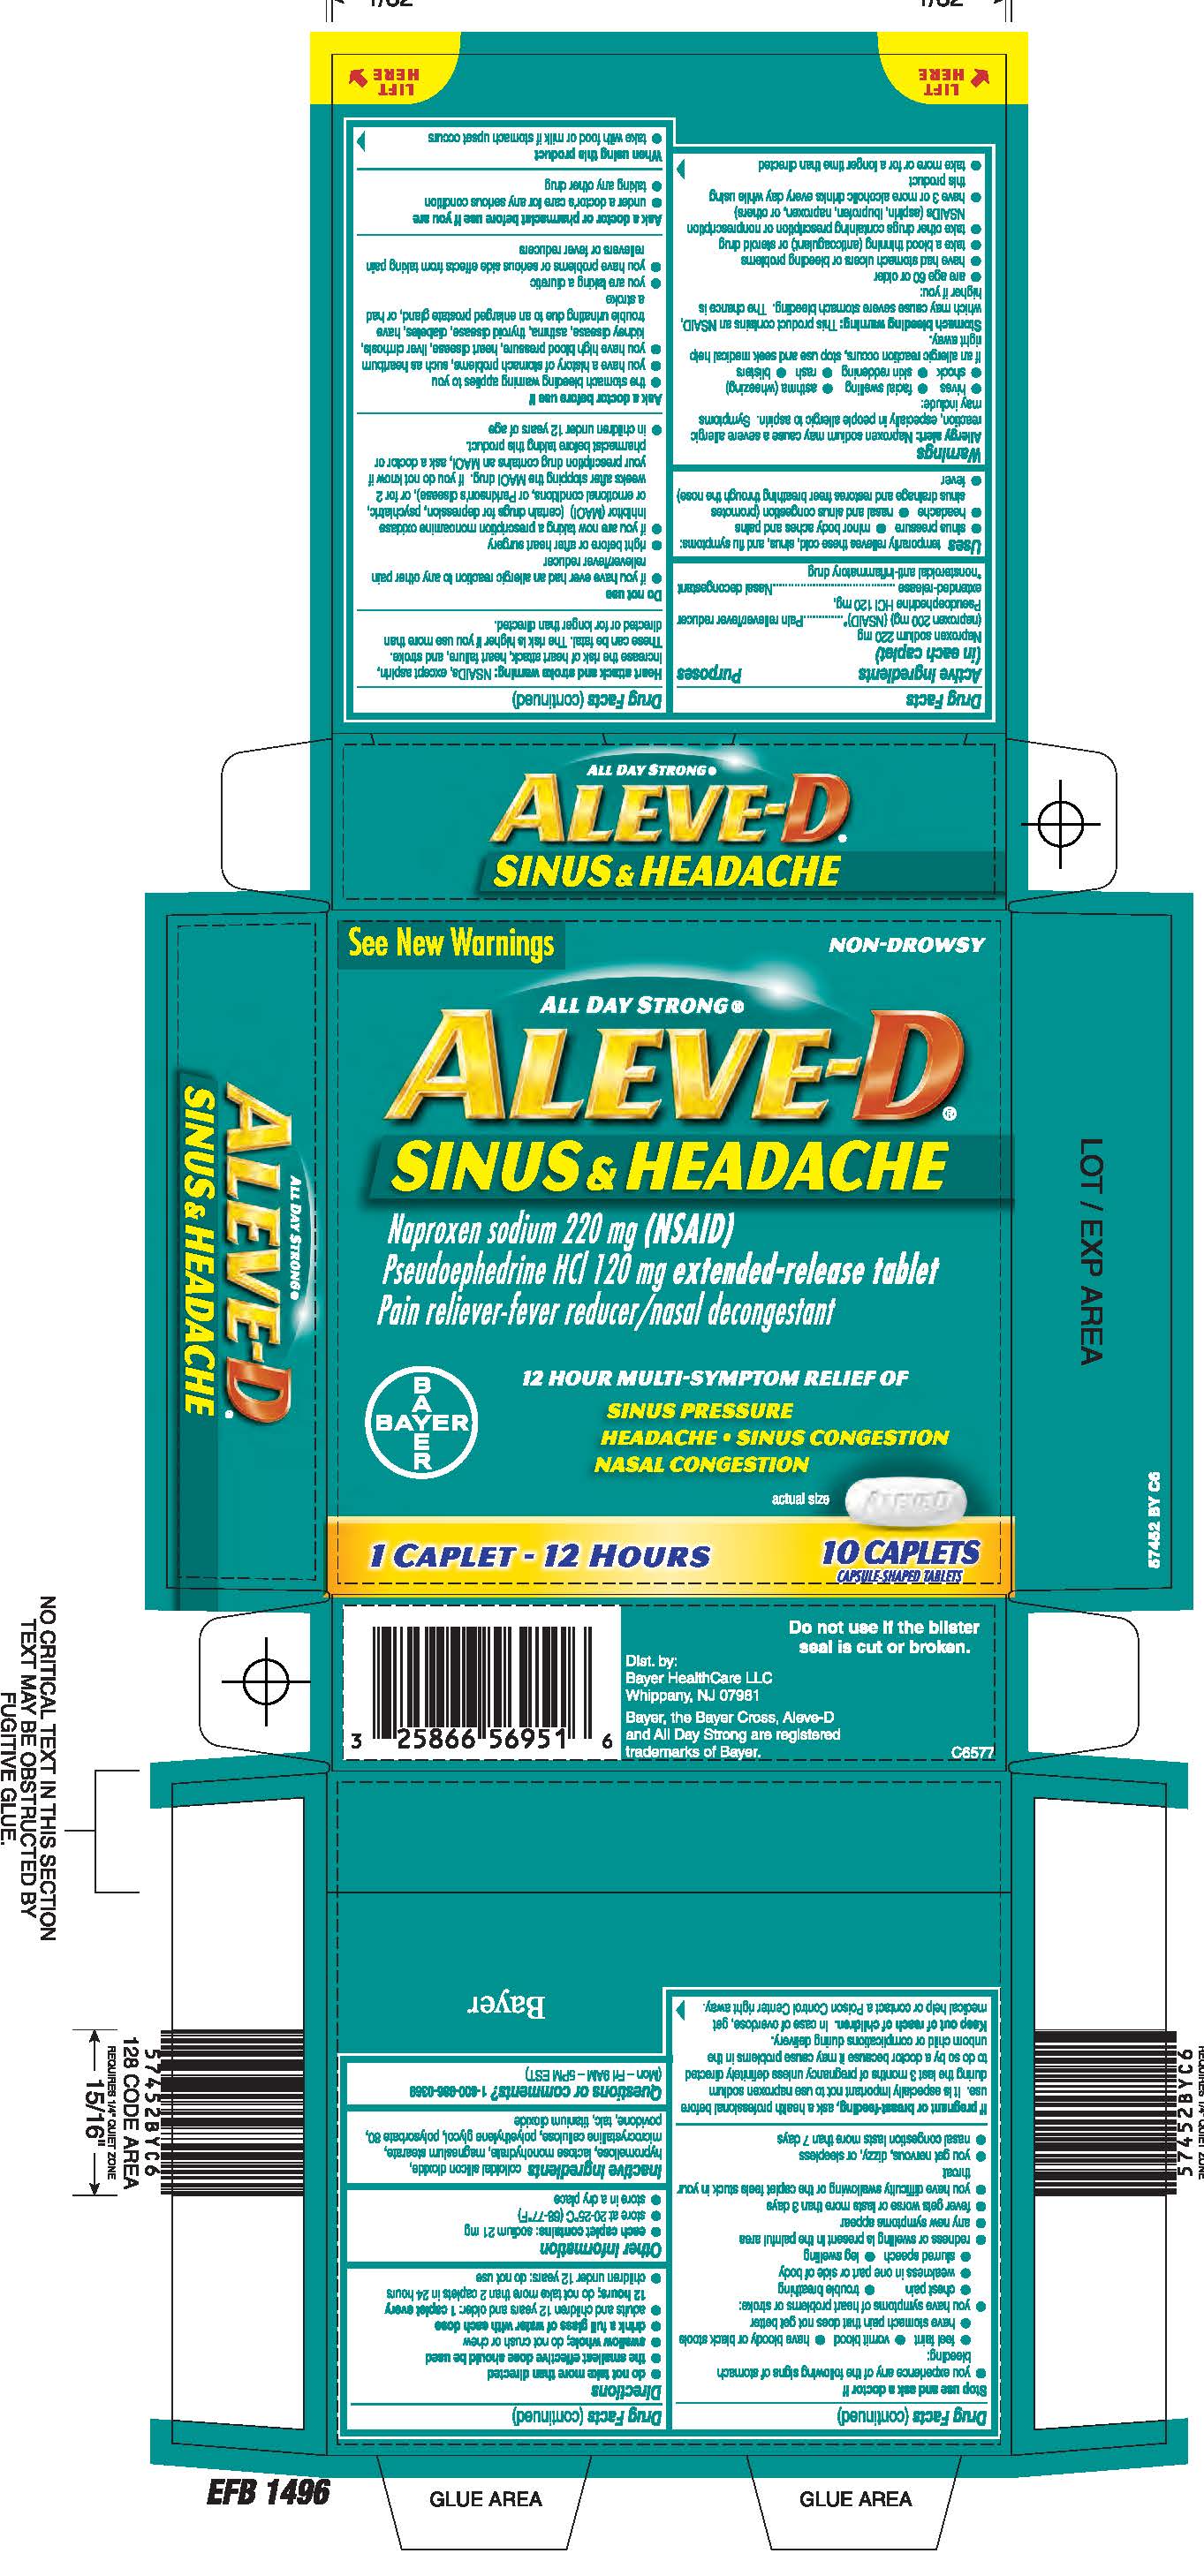 Aleve D Sinus and Headache label